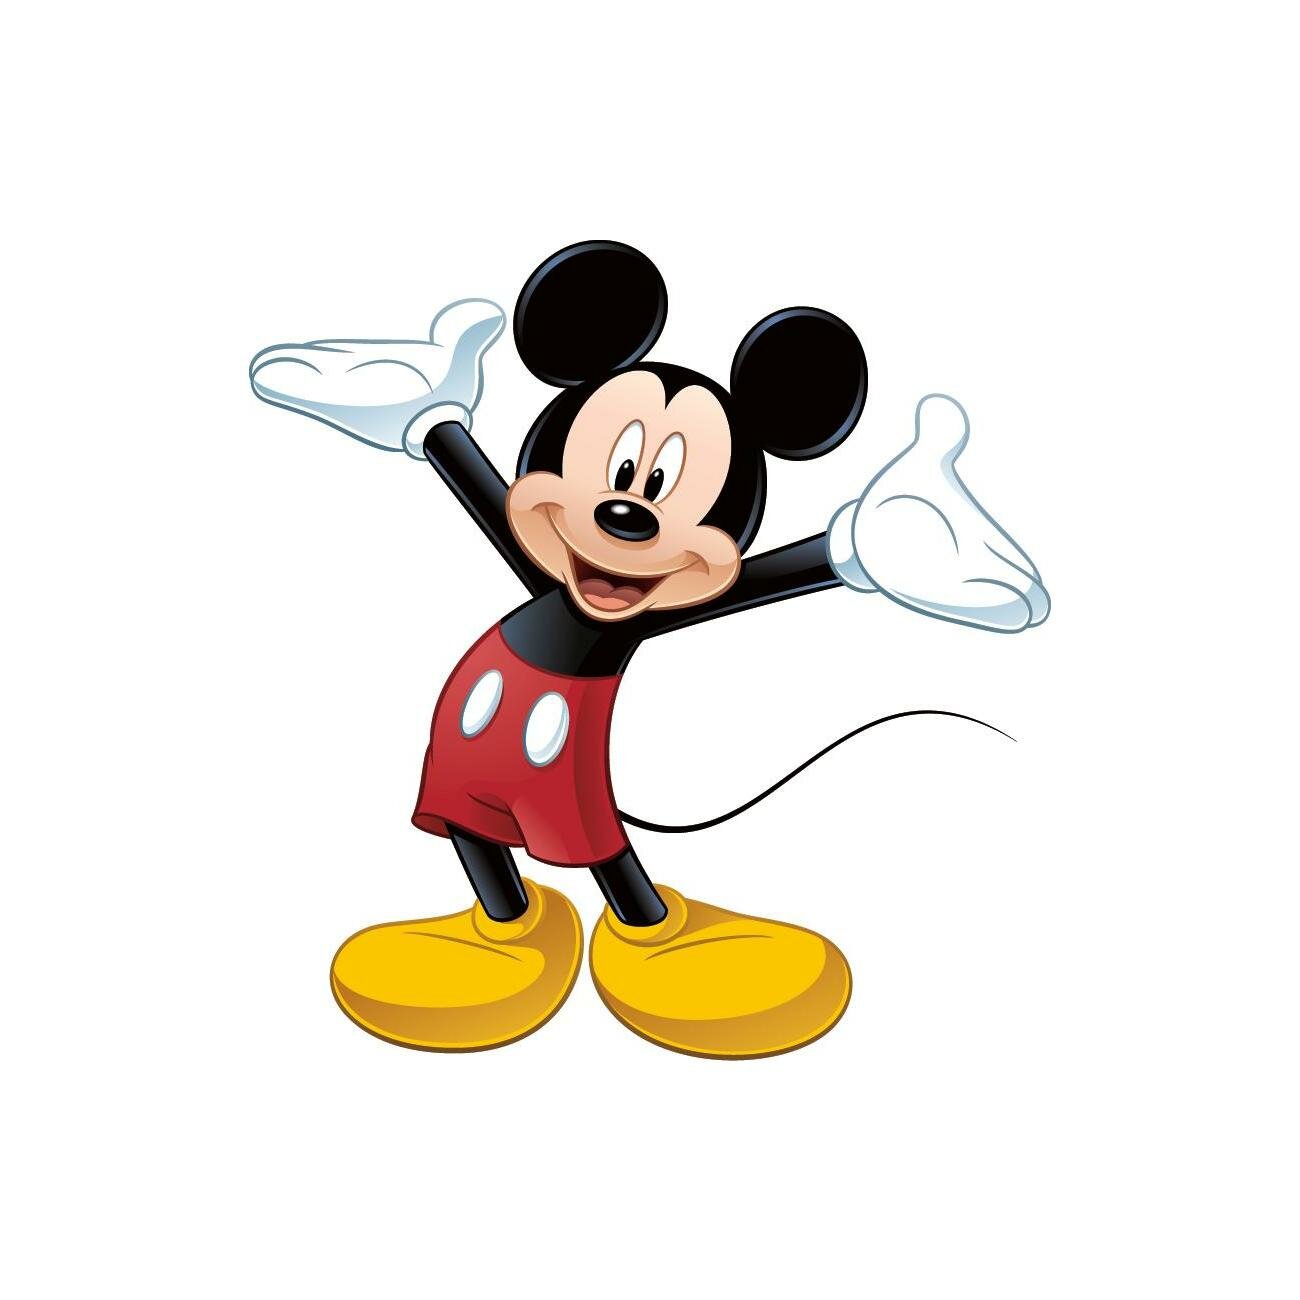 Disney Wall Decal  Mickey and Minnie Decal  Mickey Mouse Decal  Mickey and Minnie Mouse Peeking Decal  Disney Decor  Disney Gift